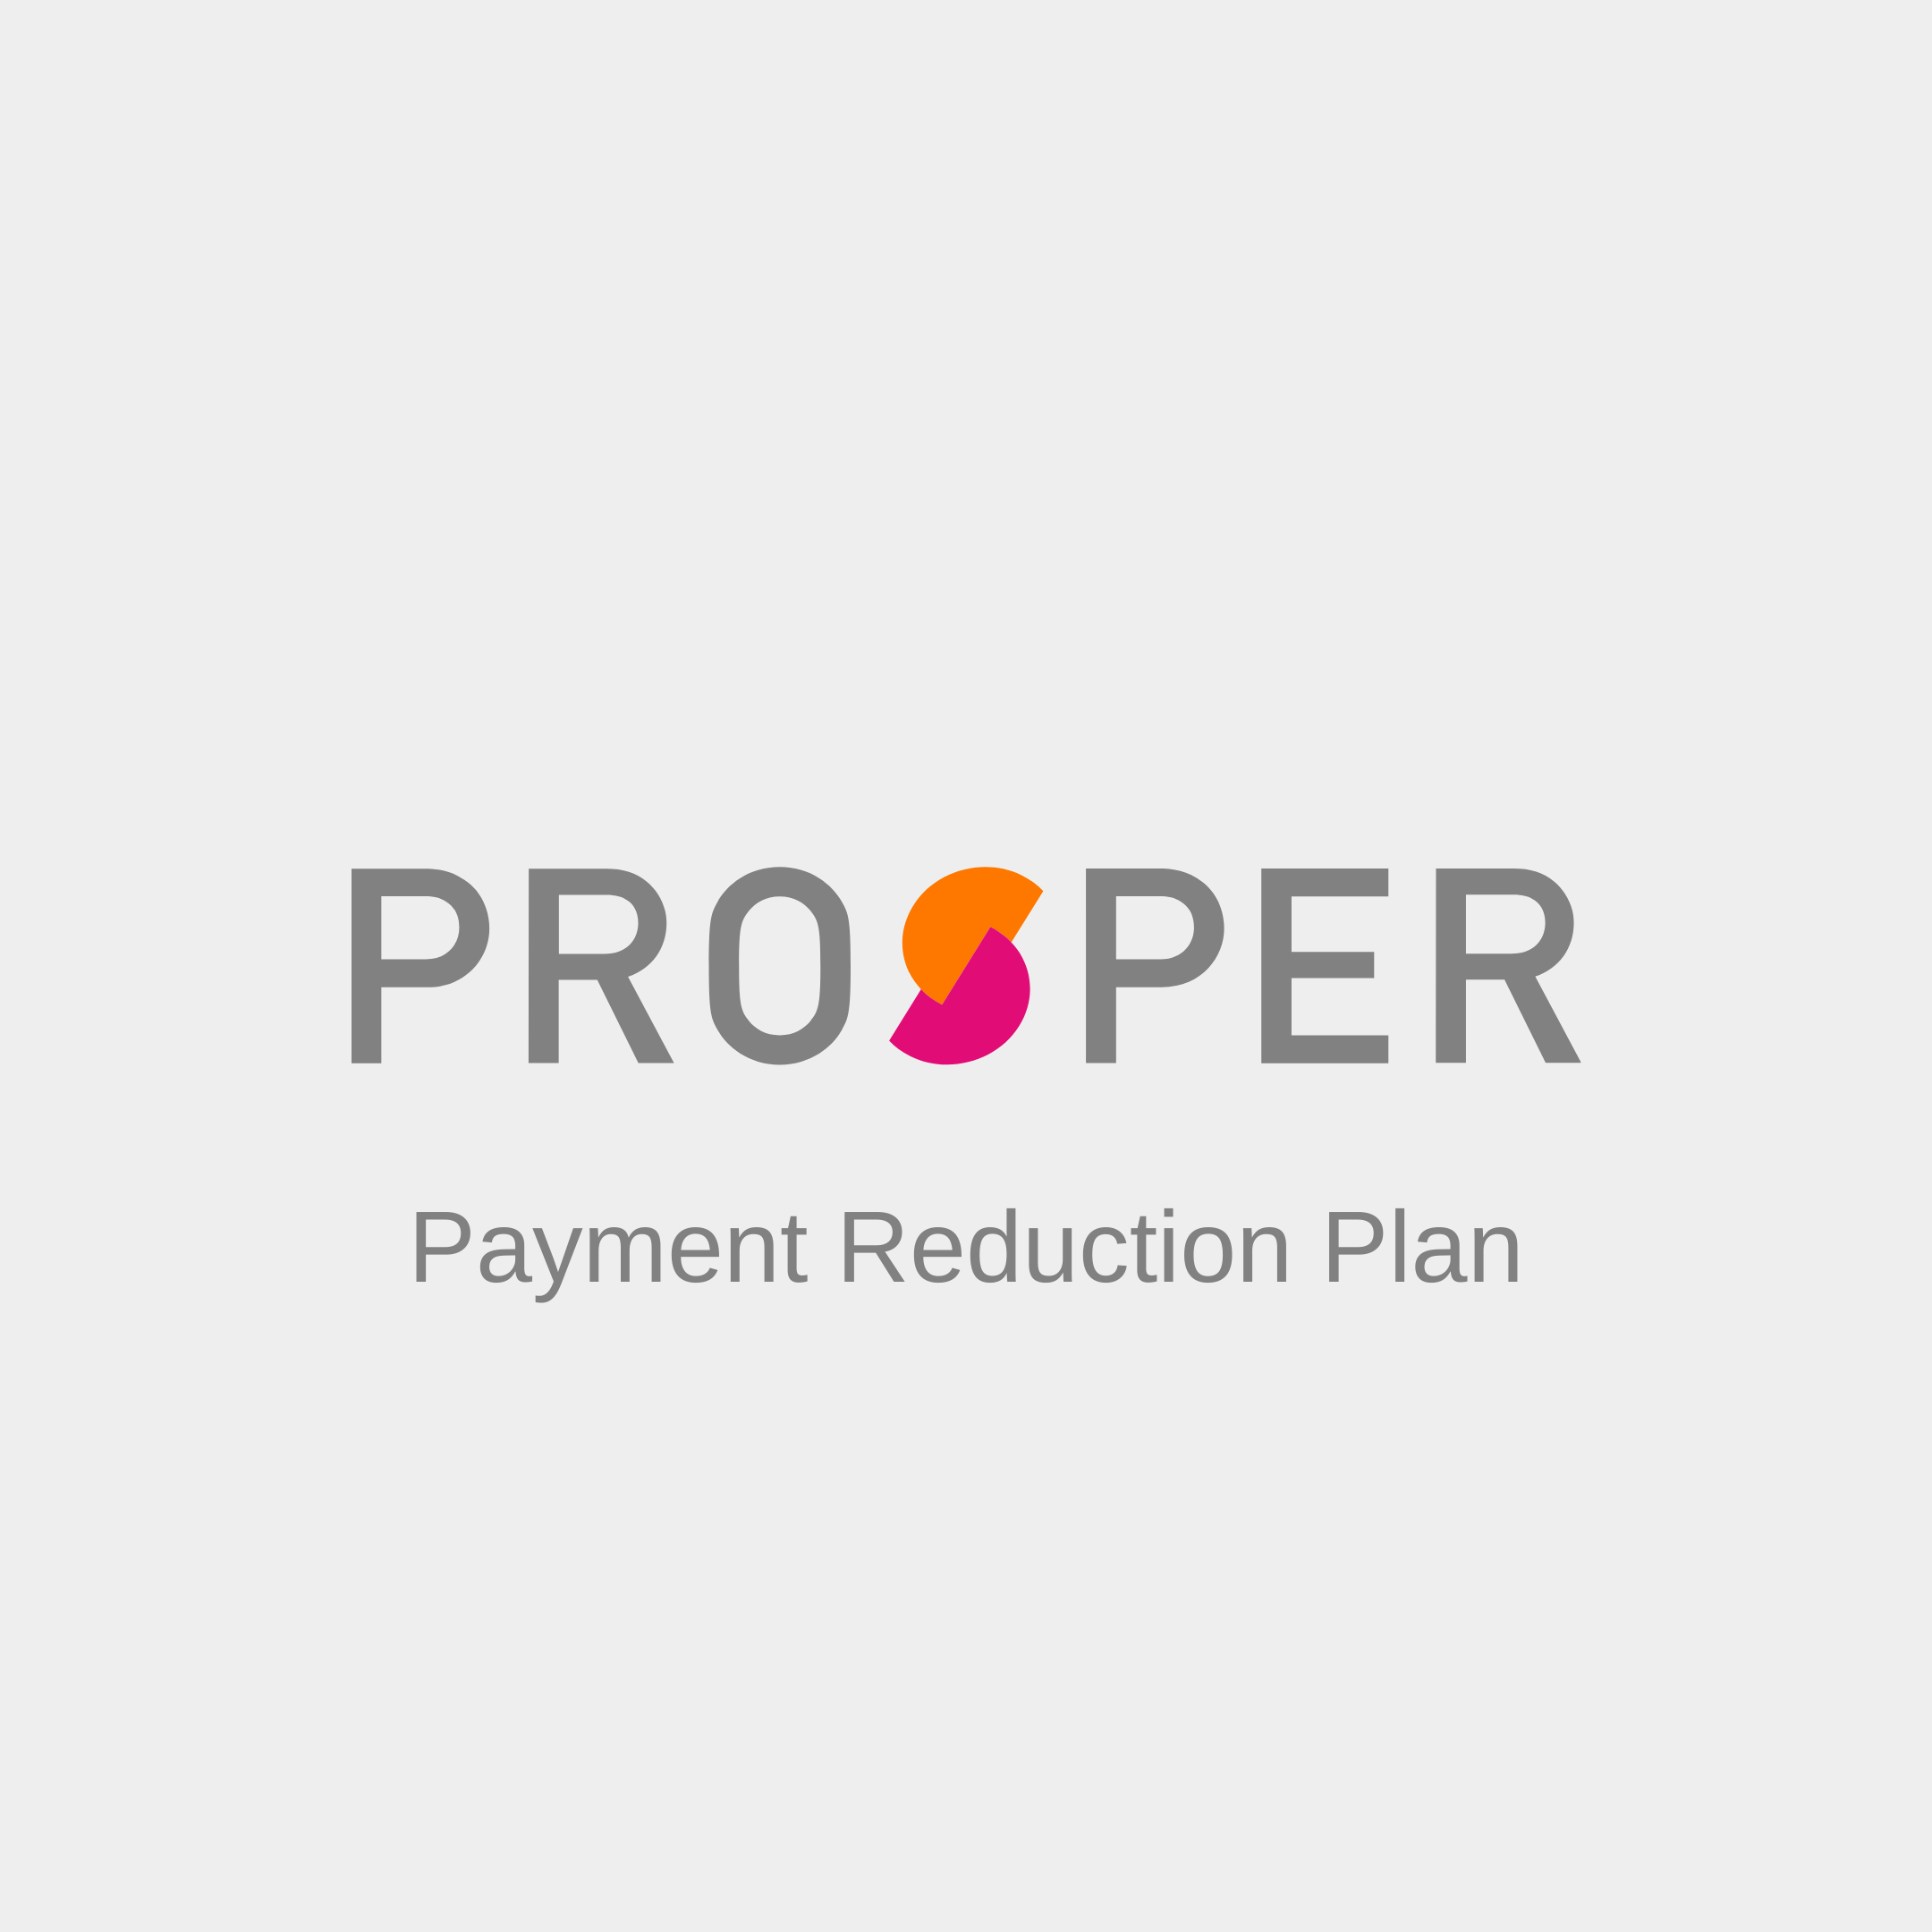 prosper payment reduction.png